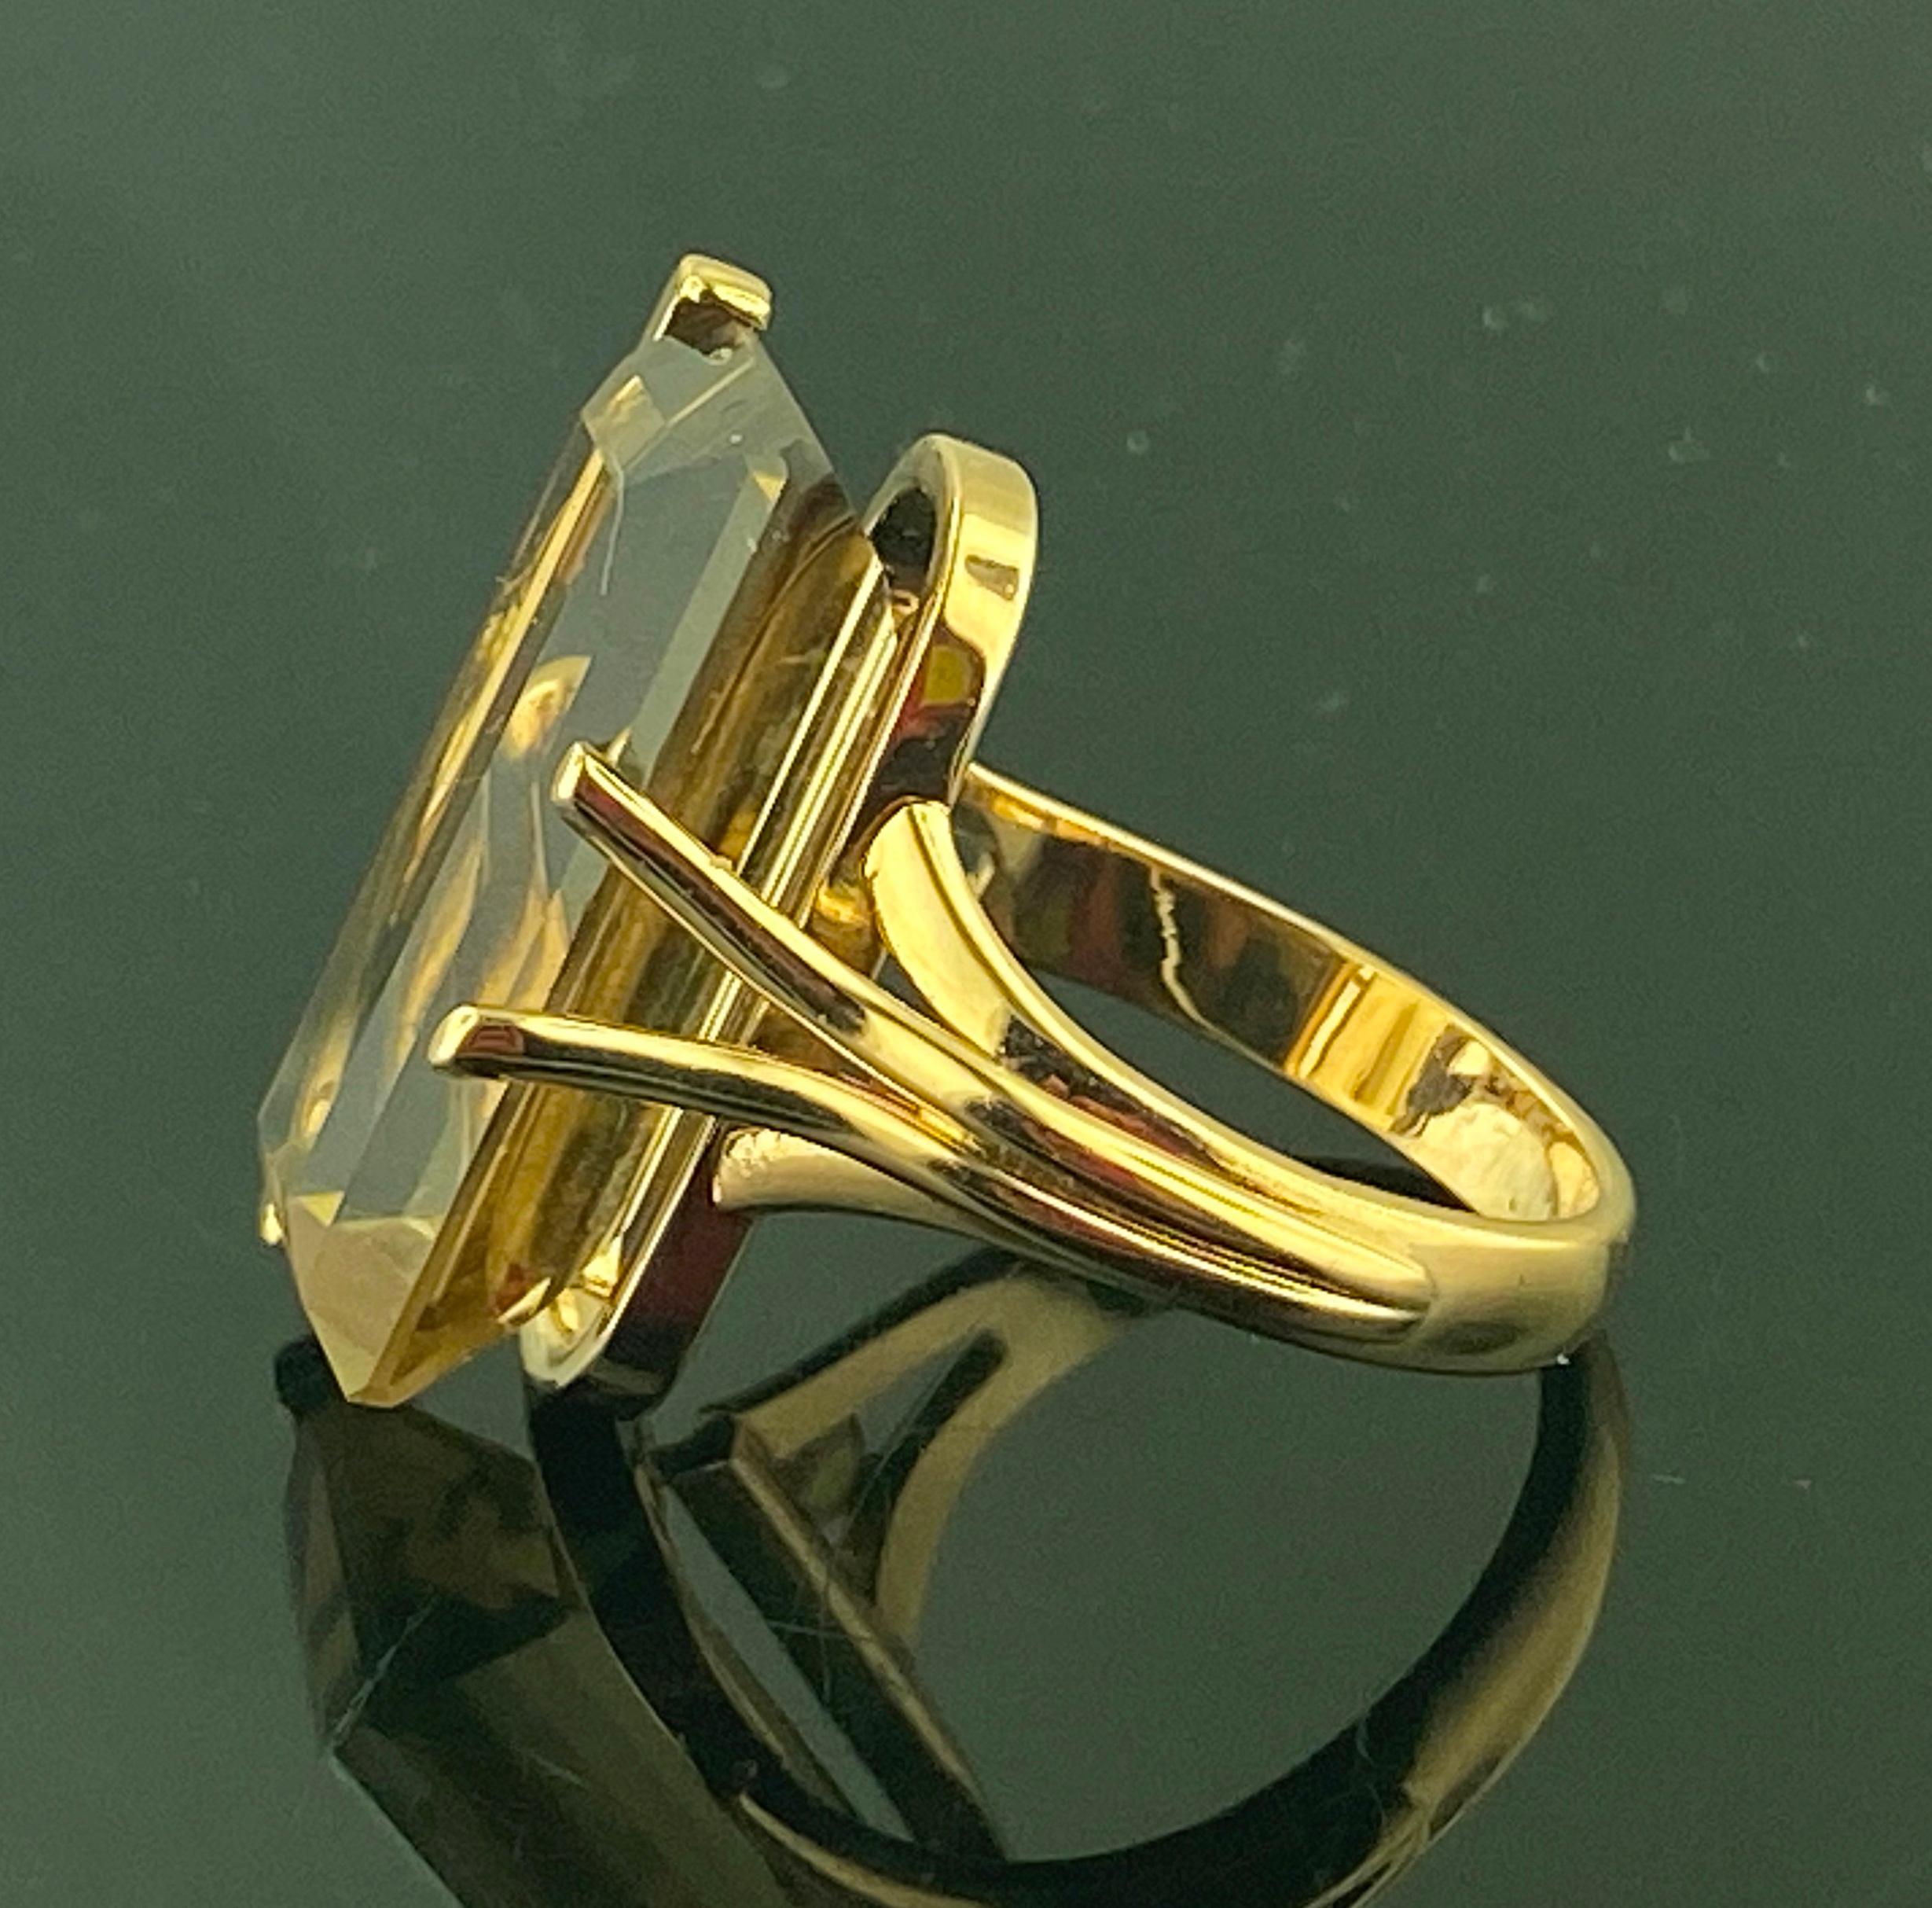 10.66 Carat Emerald Cut Smokey Quartz Ring in Yellow Gold For Sale 1